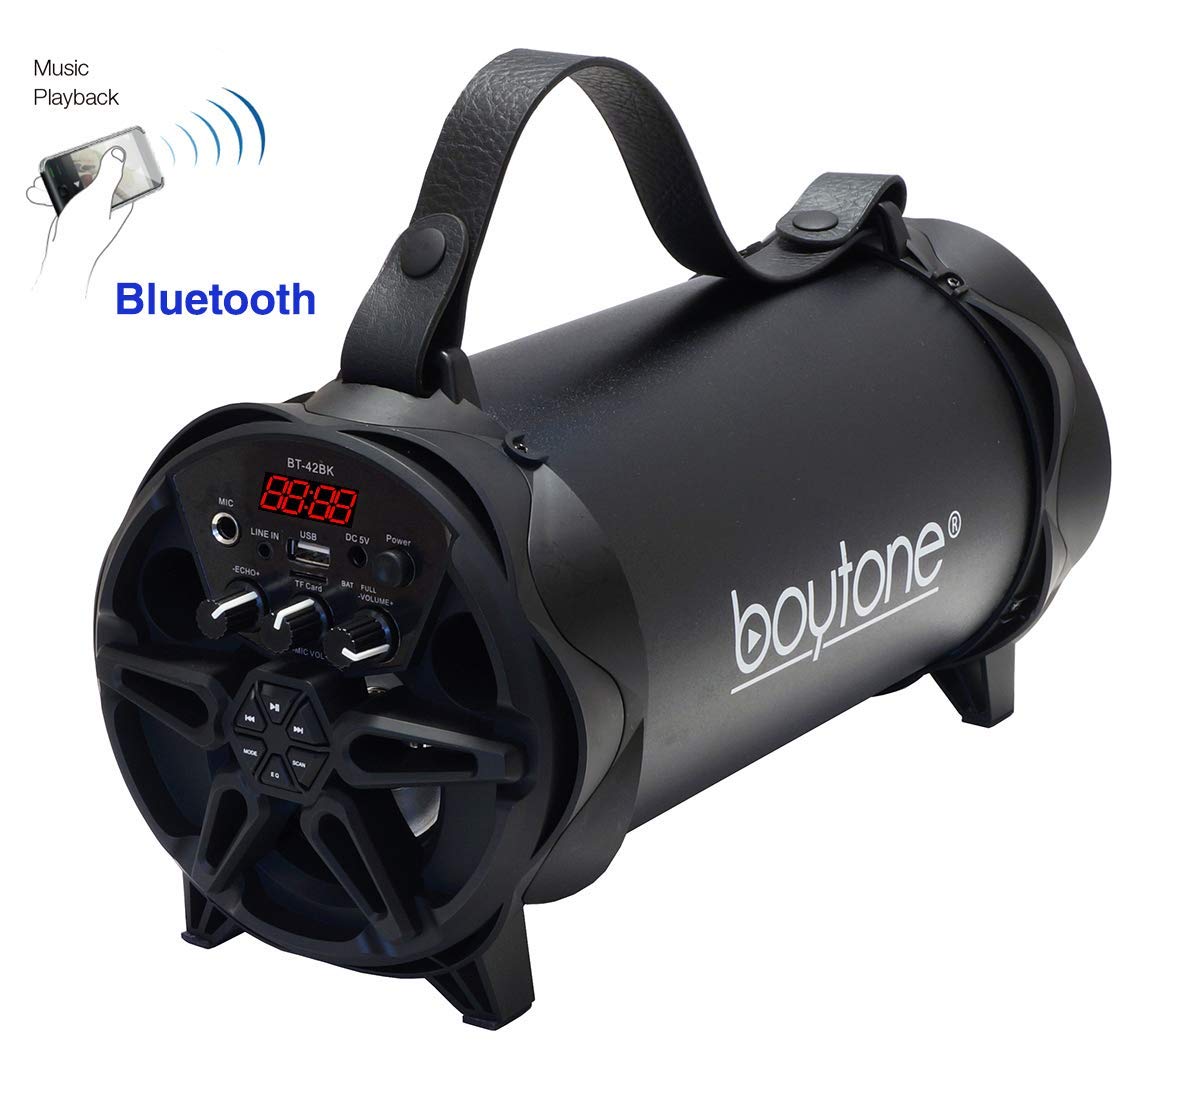 Boytone Portable Bluetooth Speaker with Water Resistant, Black, BT-42BK - image 1 of 6